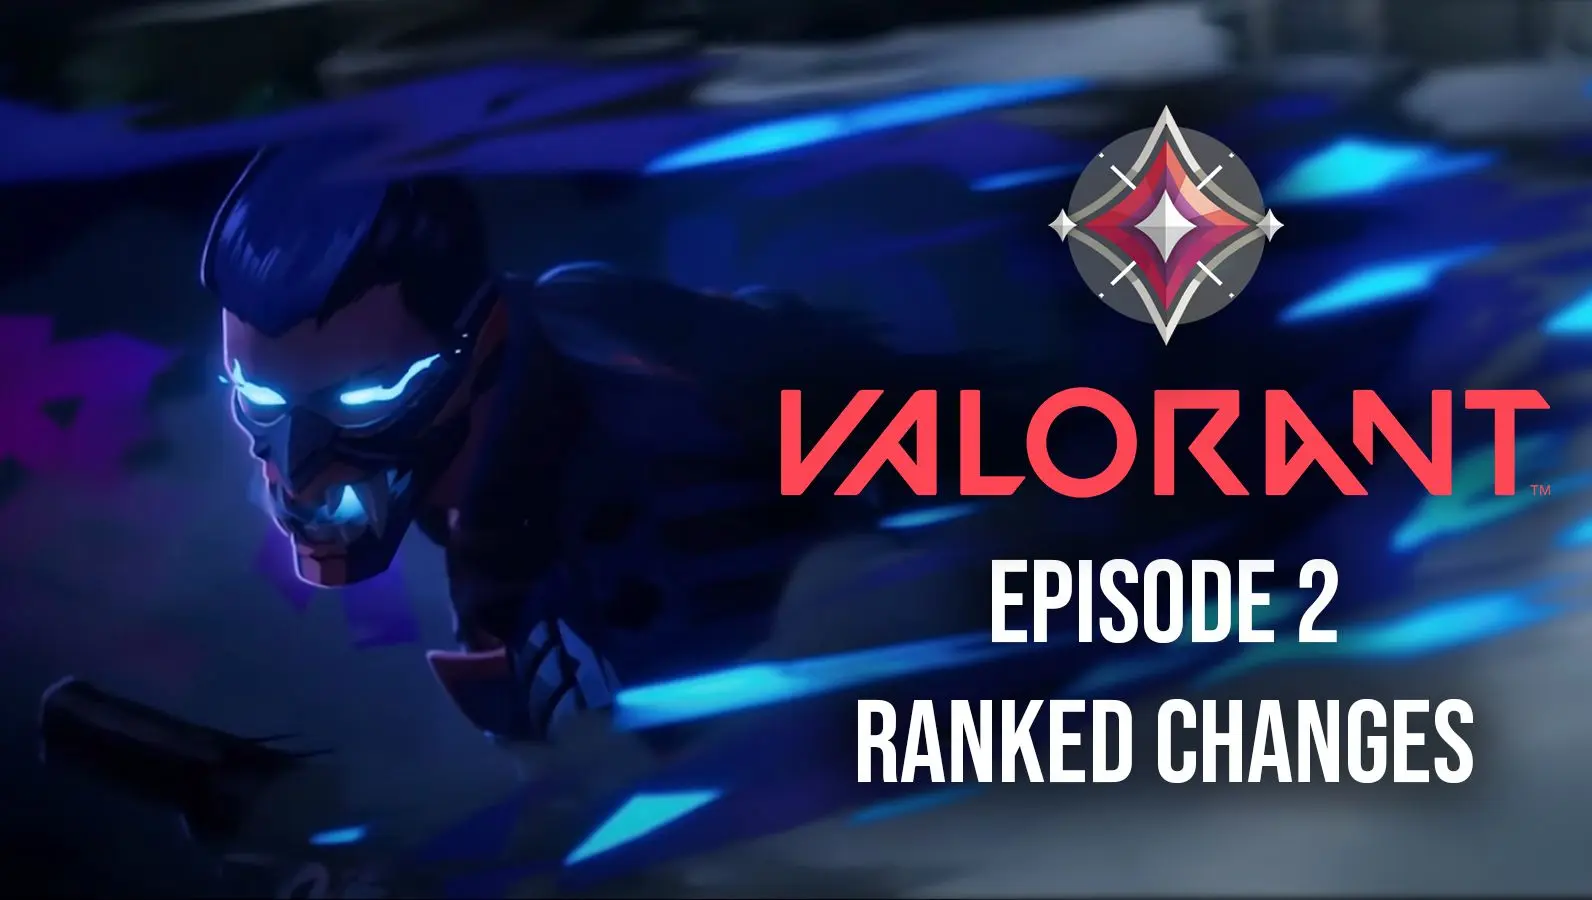 Valorant revamping rank system, adding leaderboards in Episode 2 